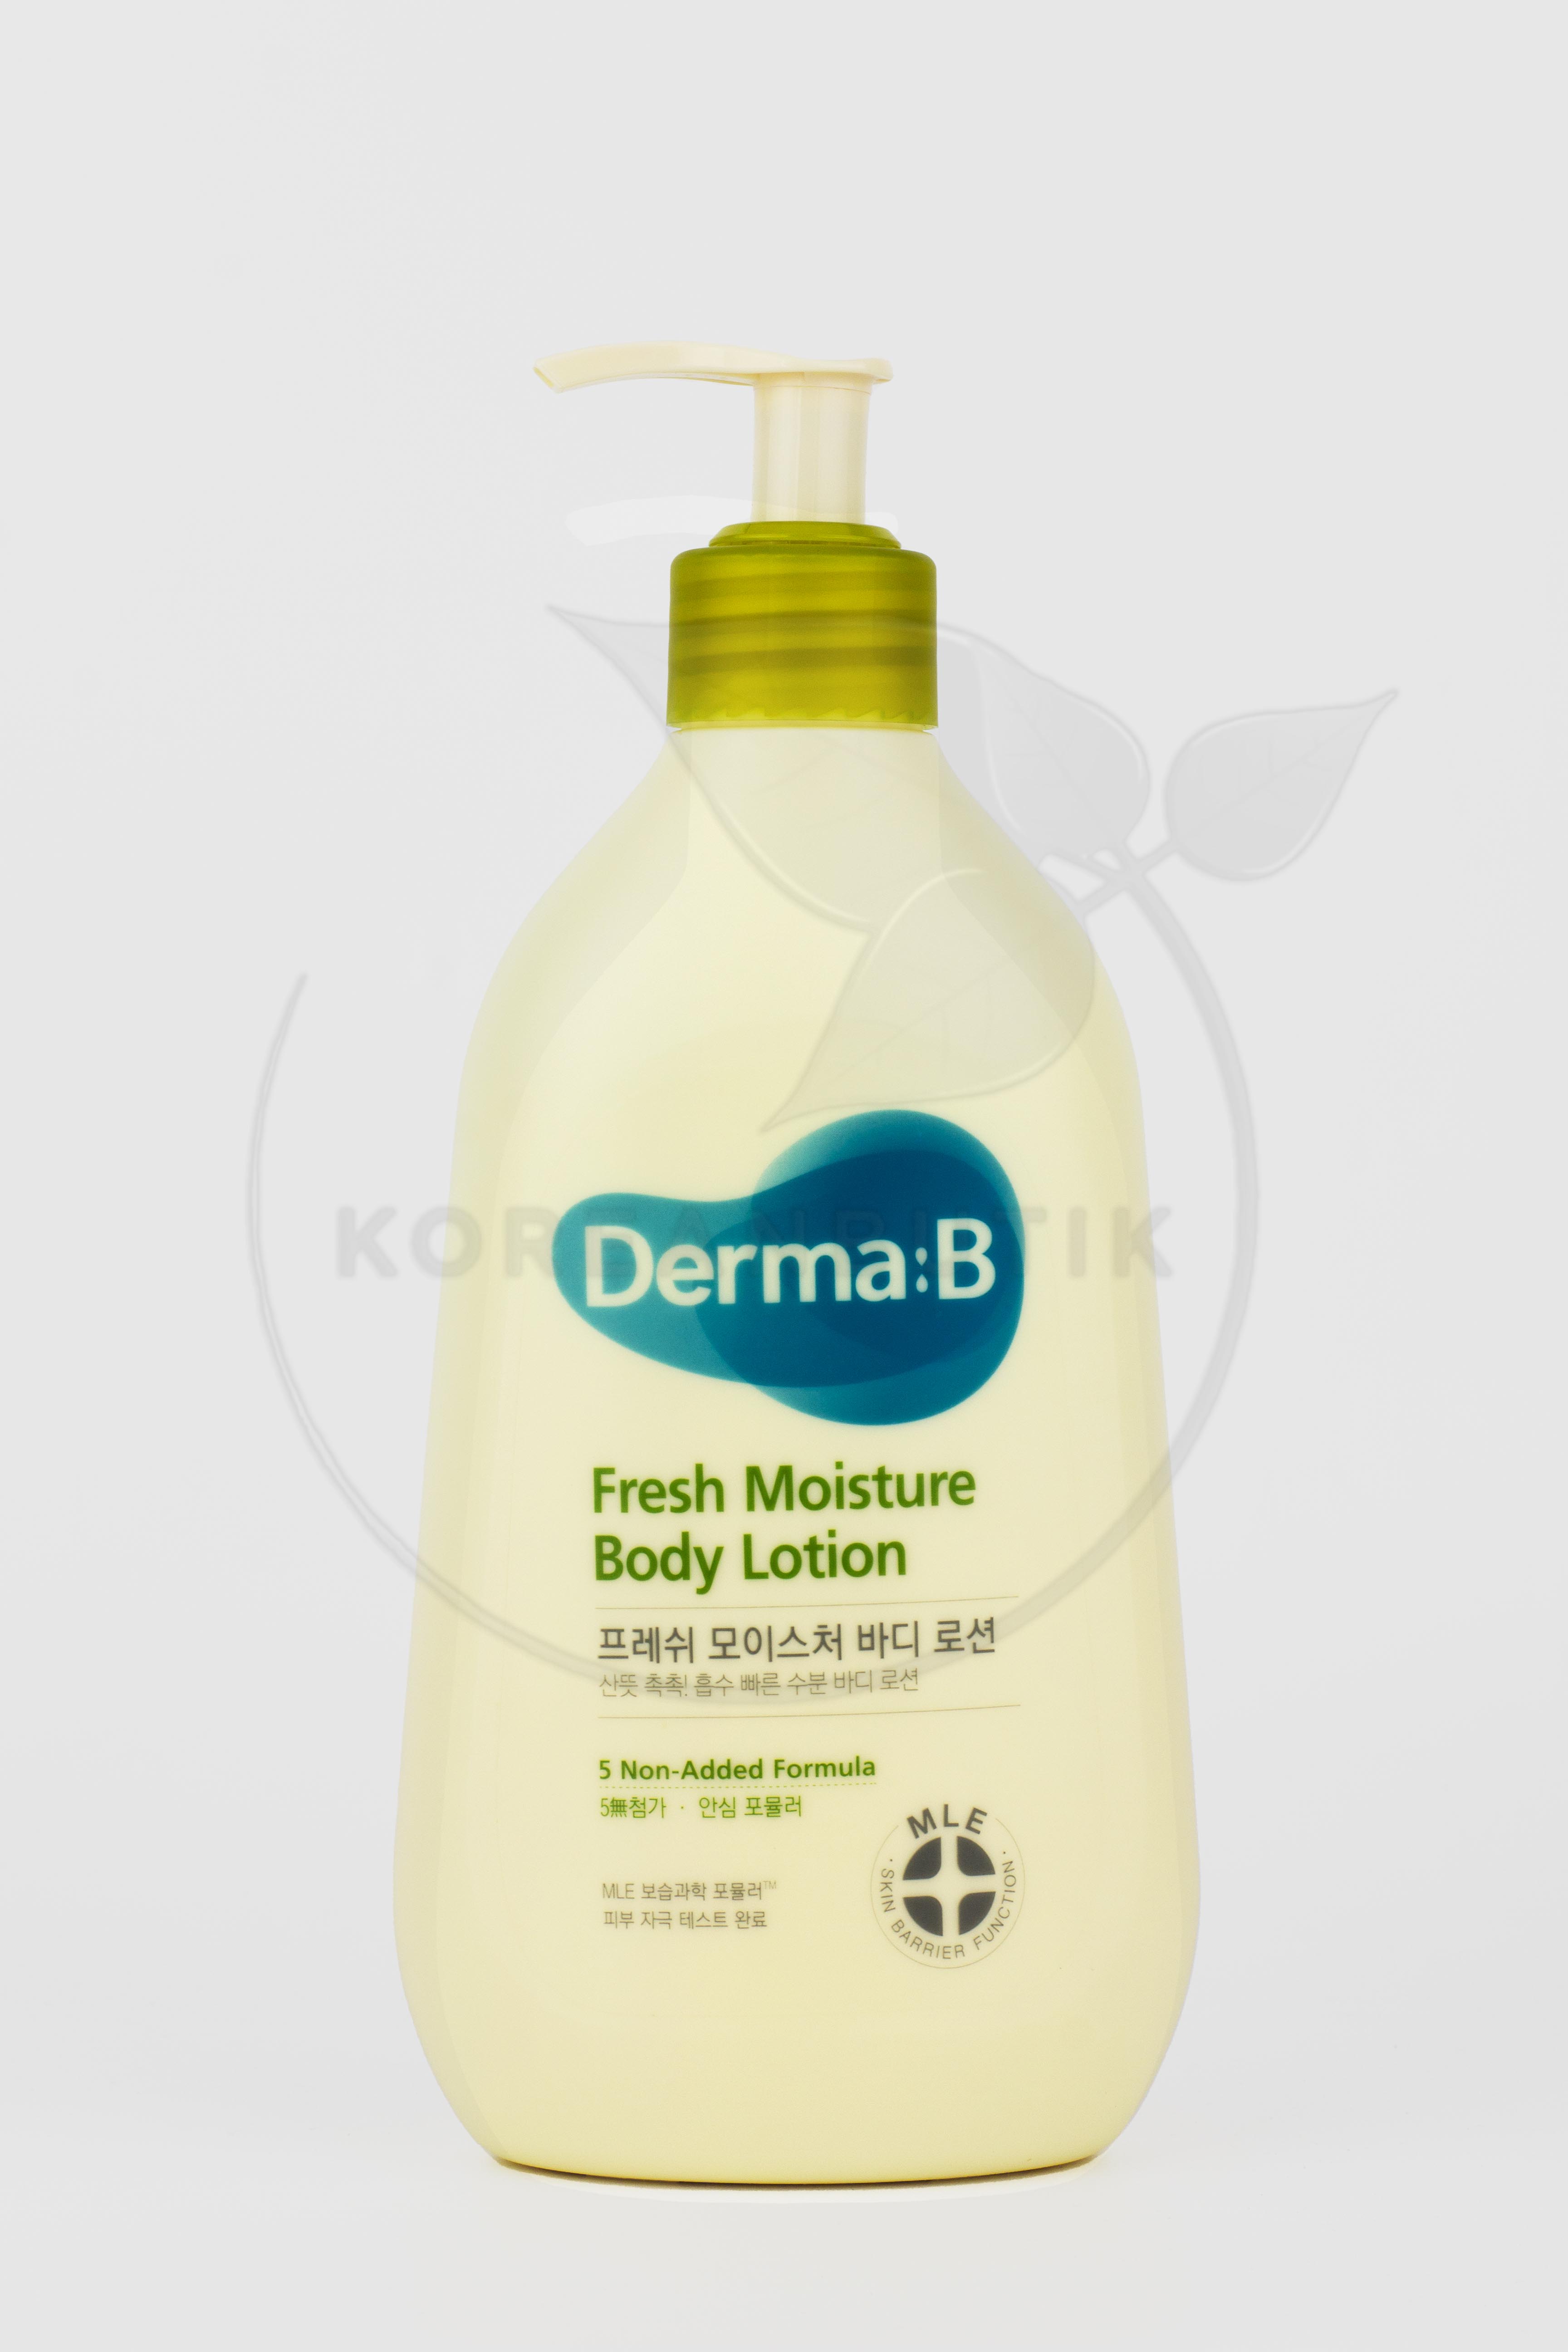  Derma:B Fresh Moisture Body Lotion..